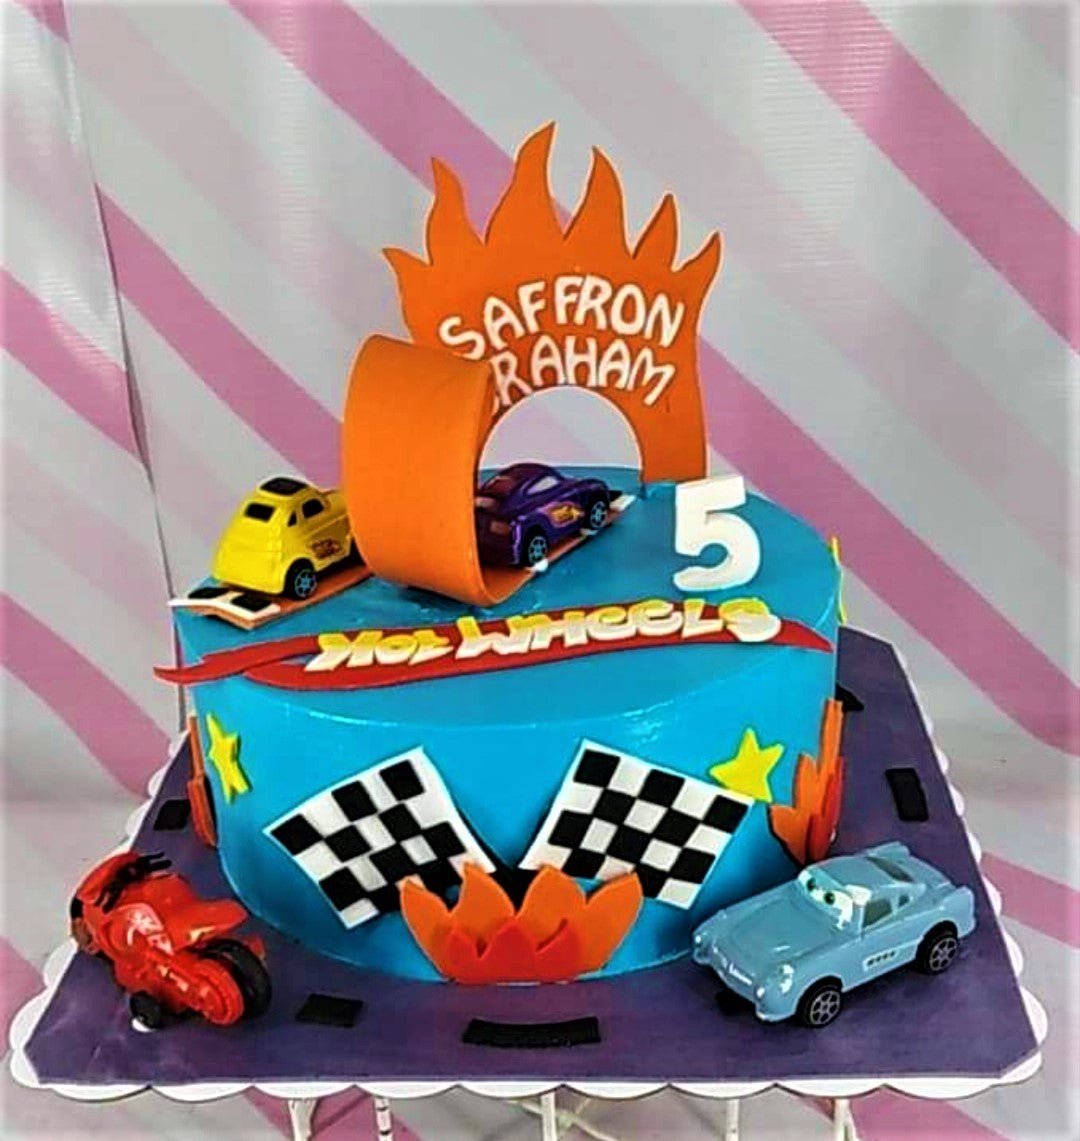 Wonky Hot Wheels Birthday Cake